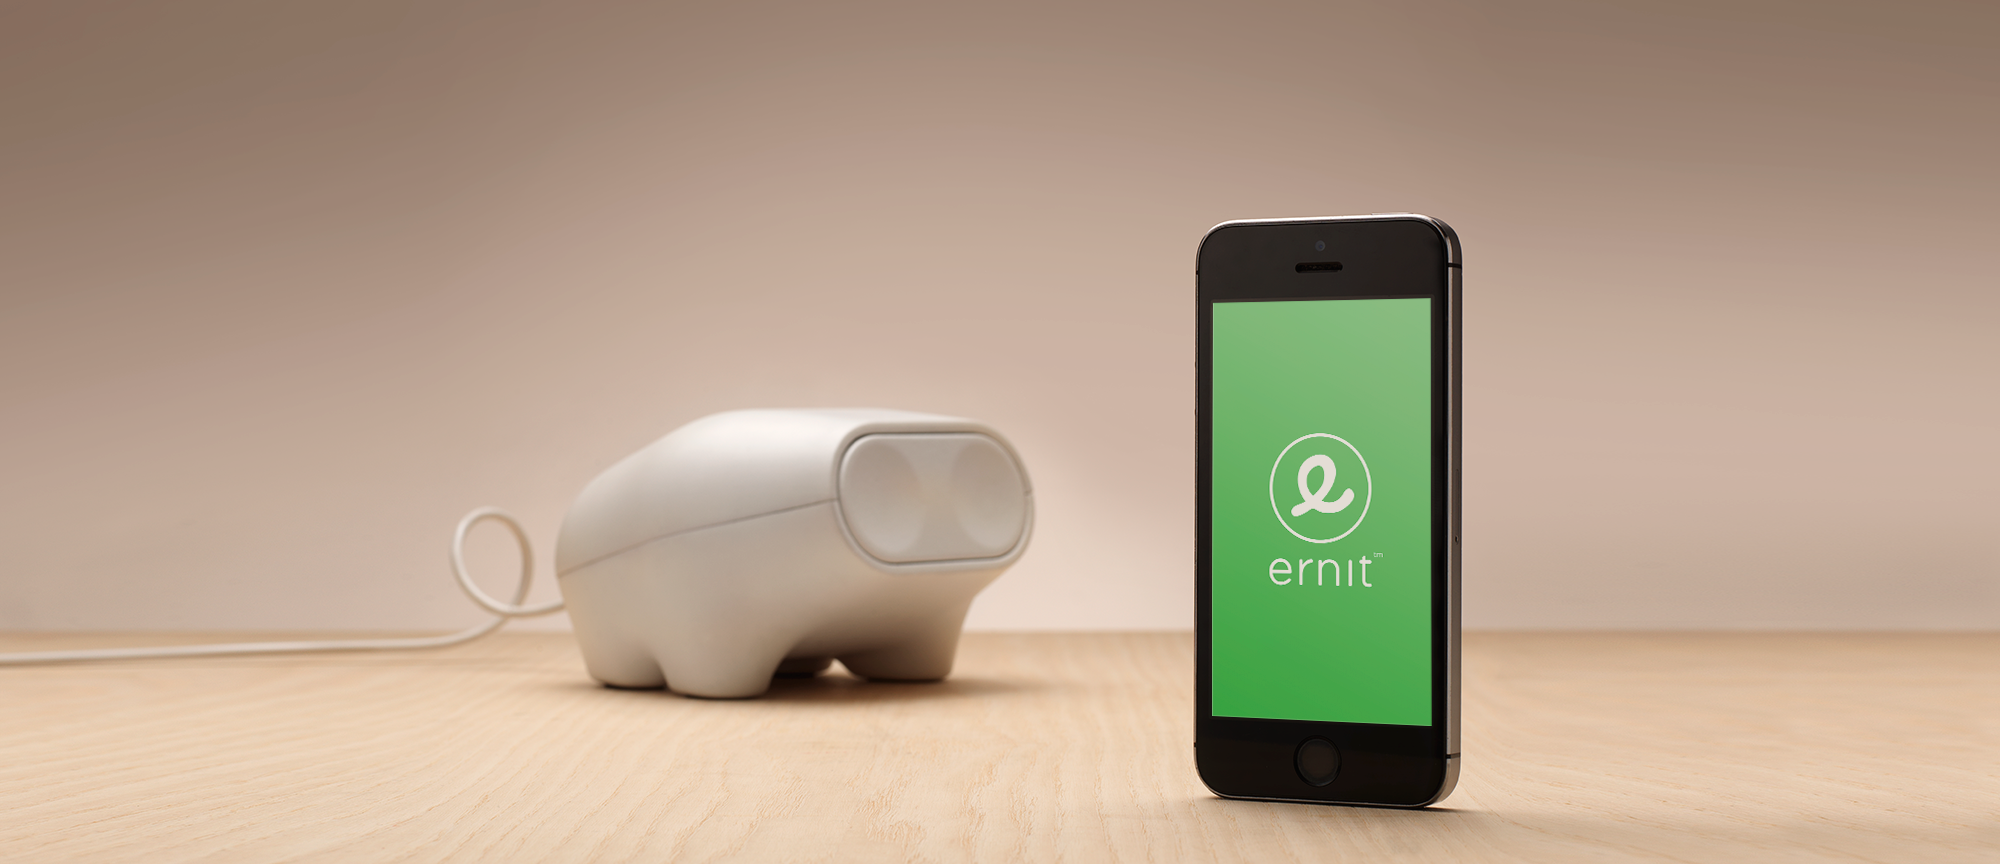 Ernit piggy bank and app